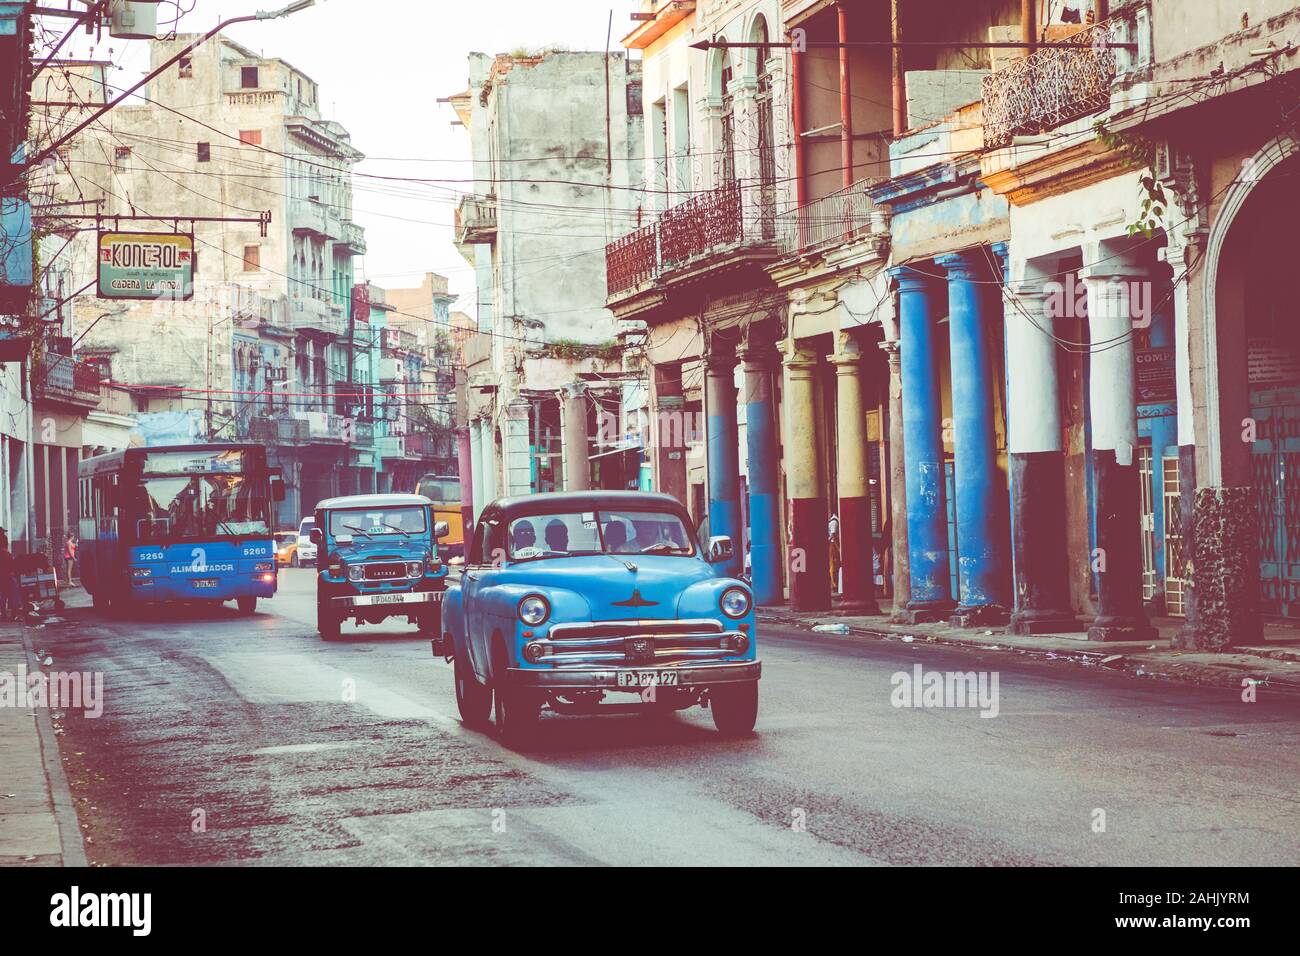 HAVANA, CUBA - DECEMBER 10, 2019: Vintage colored classic american cars in Old Havana, Cuba. Stock Photo